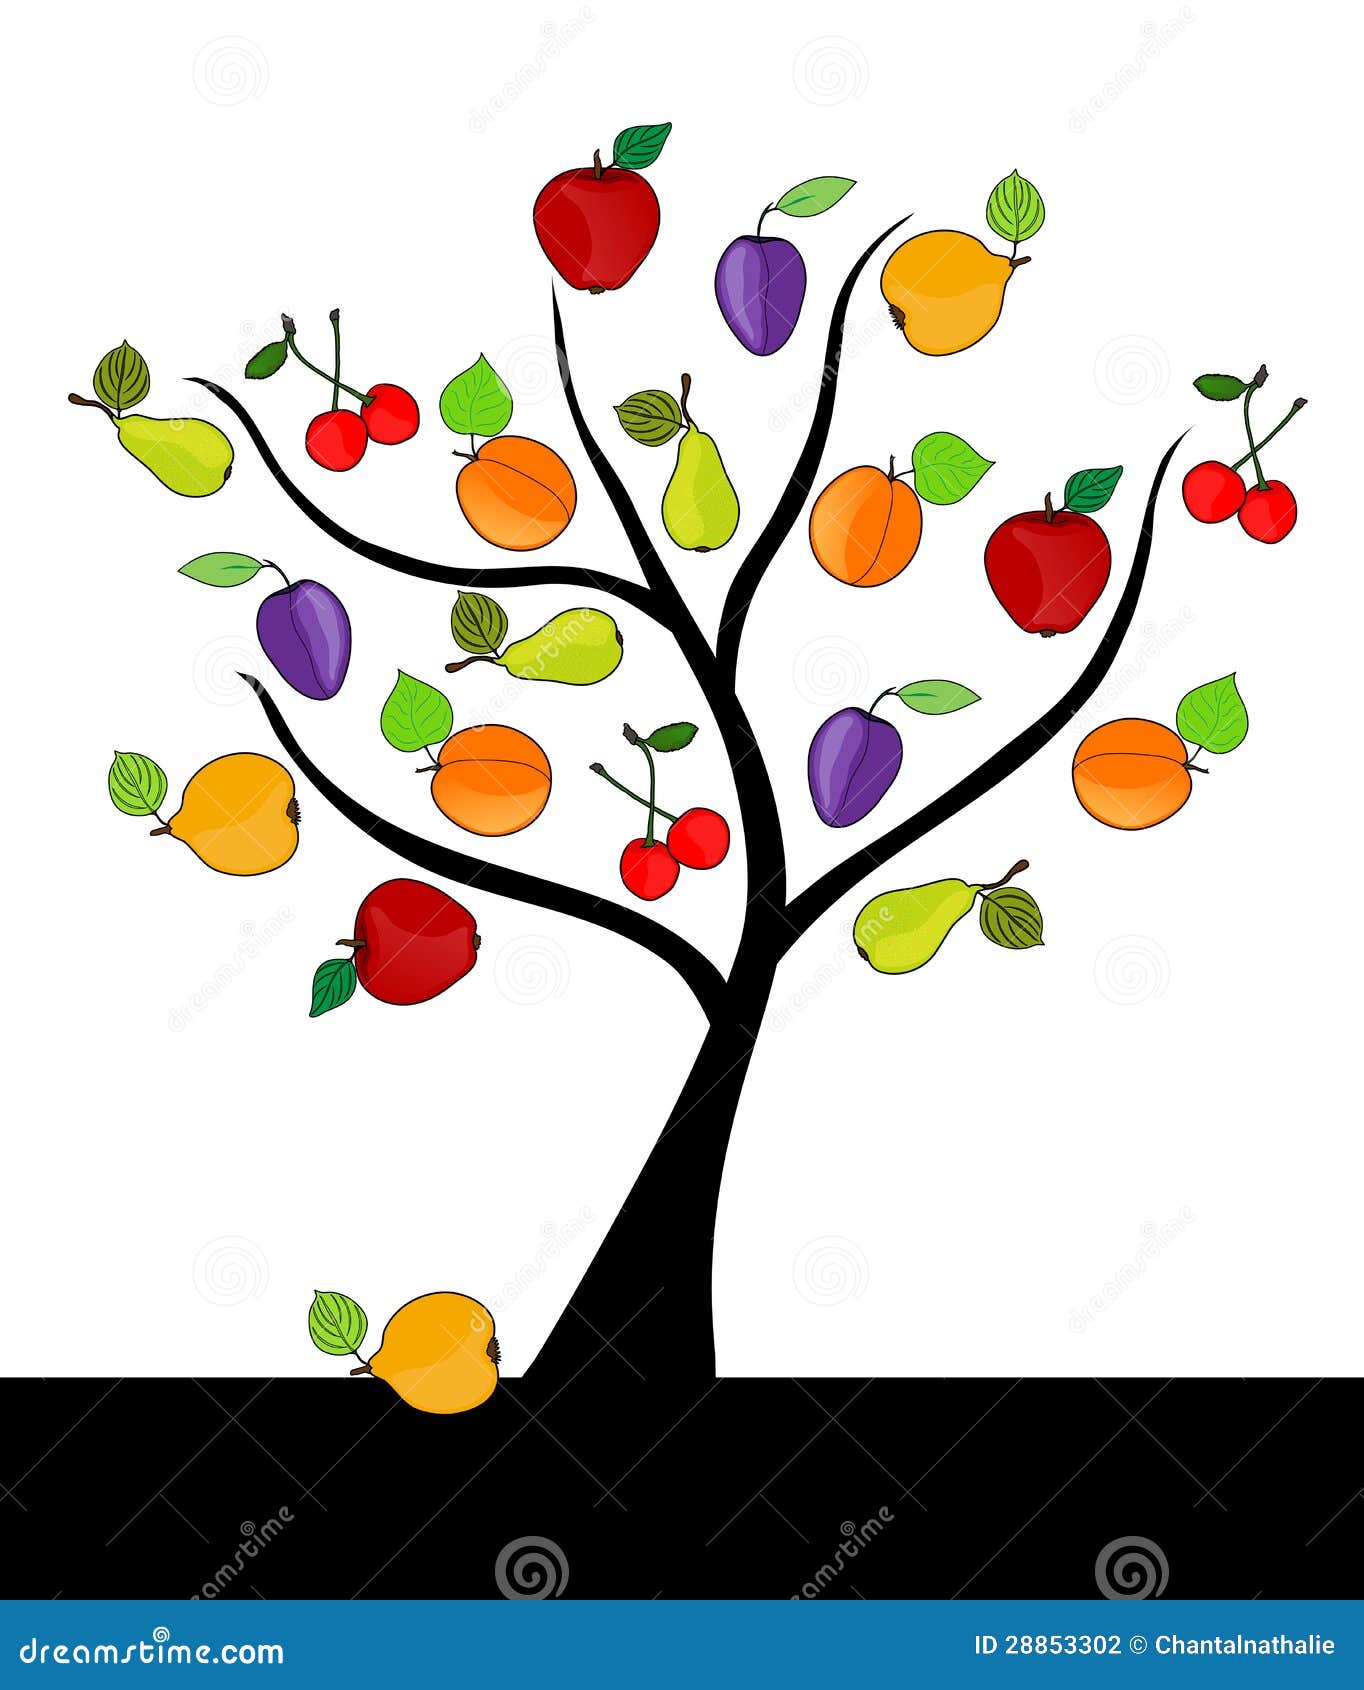 clipart fruit tree - photo #24